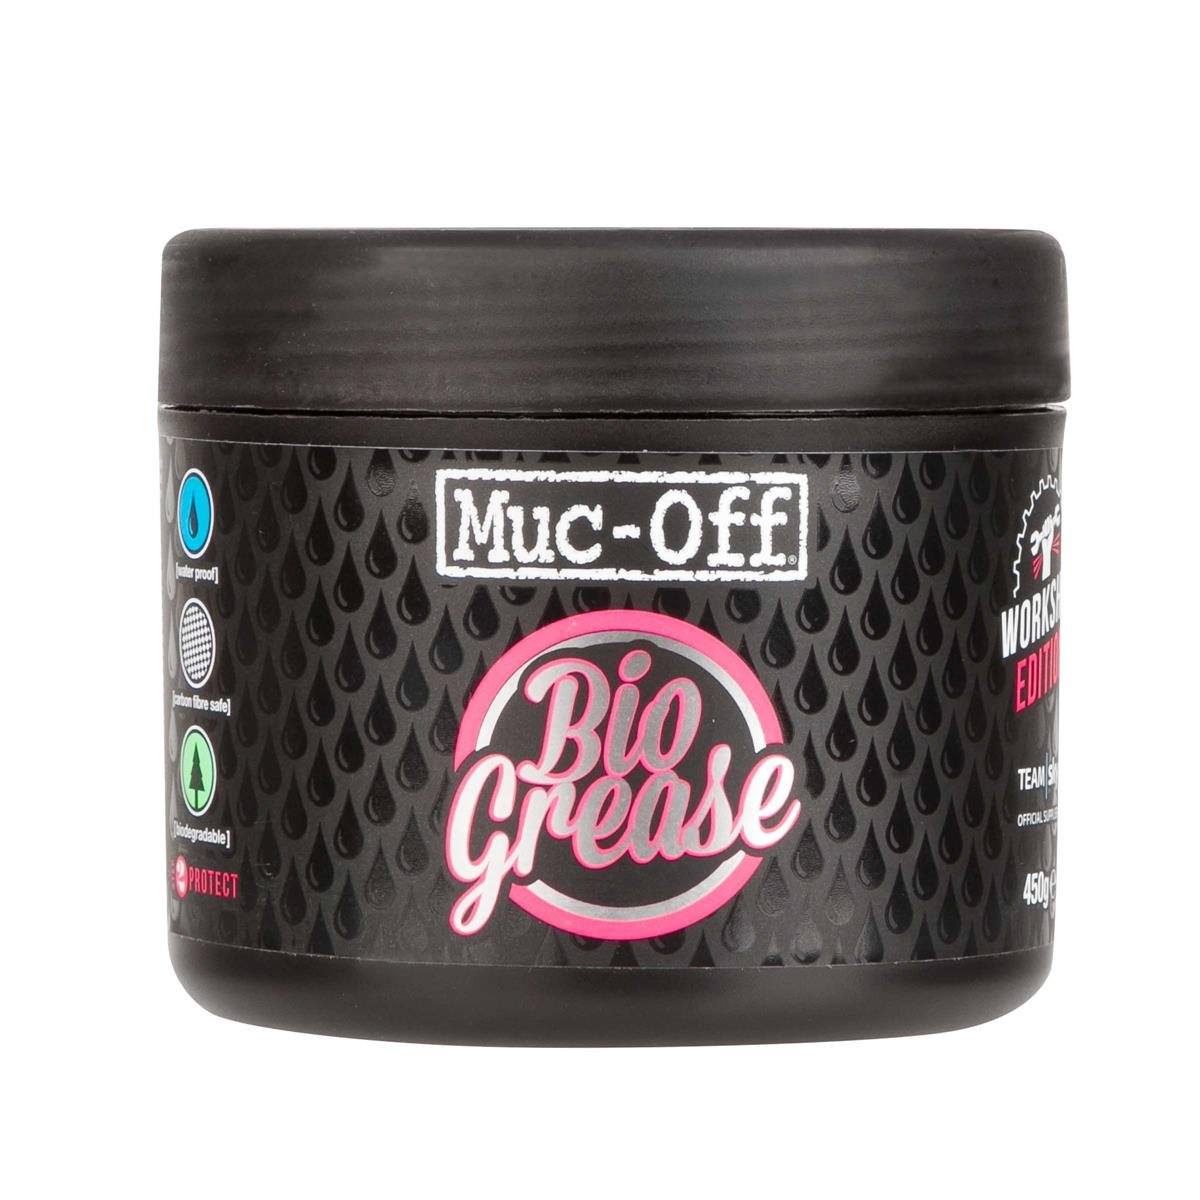 Muc-Off Grease Bio Grease 450 ml